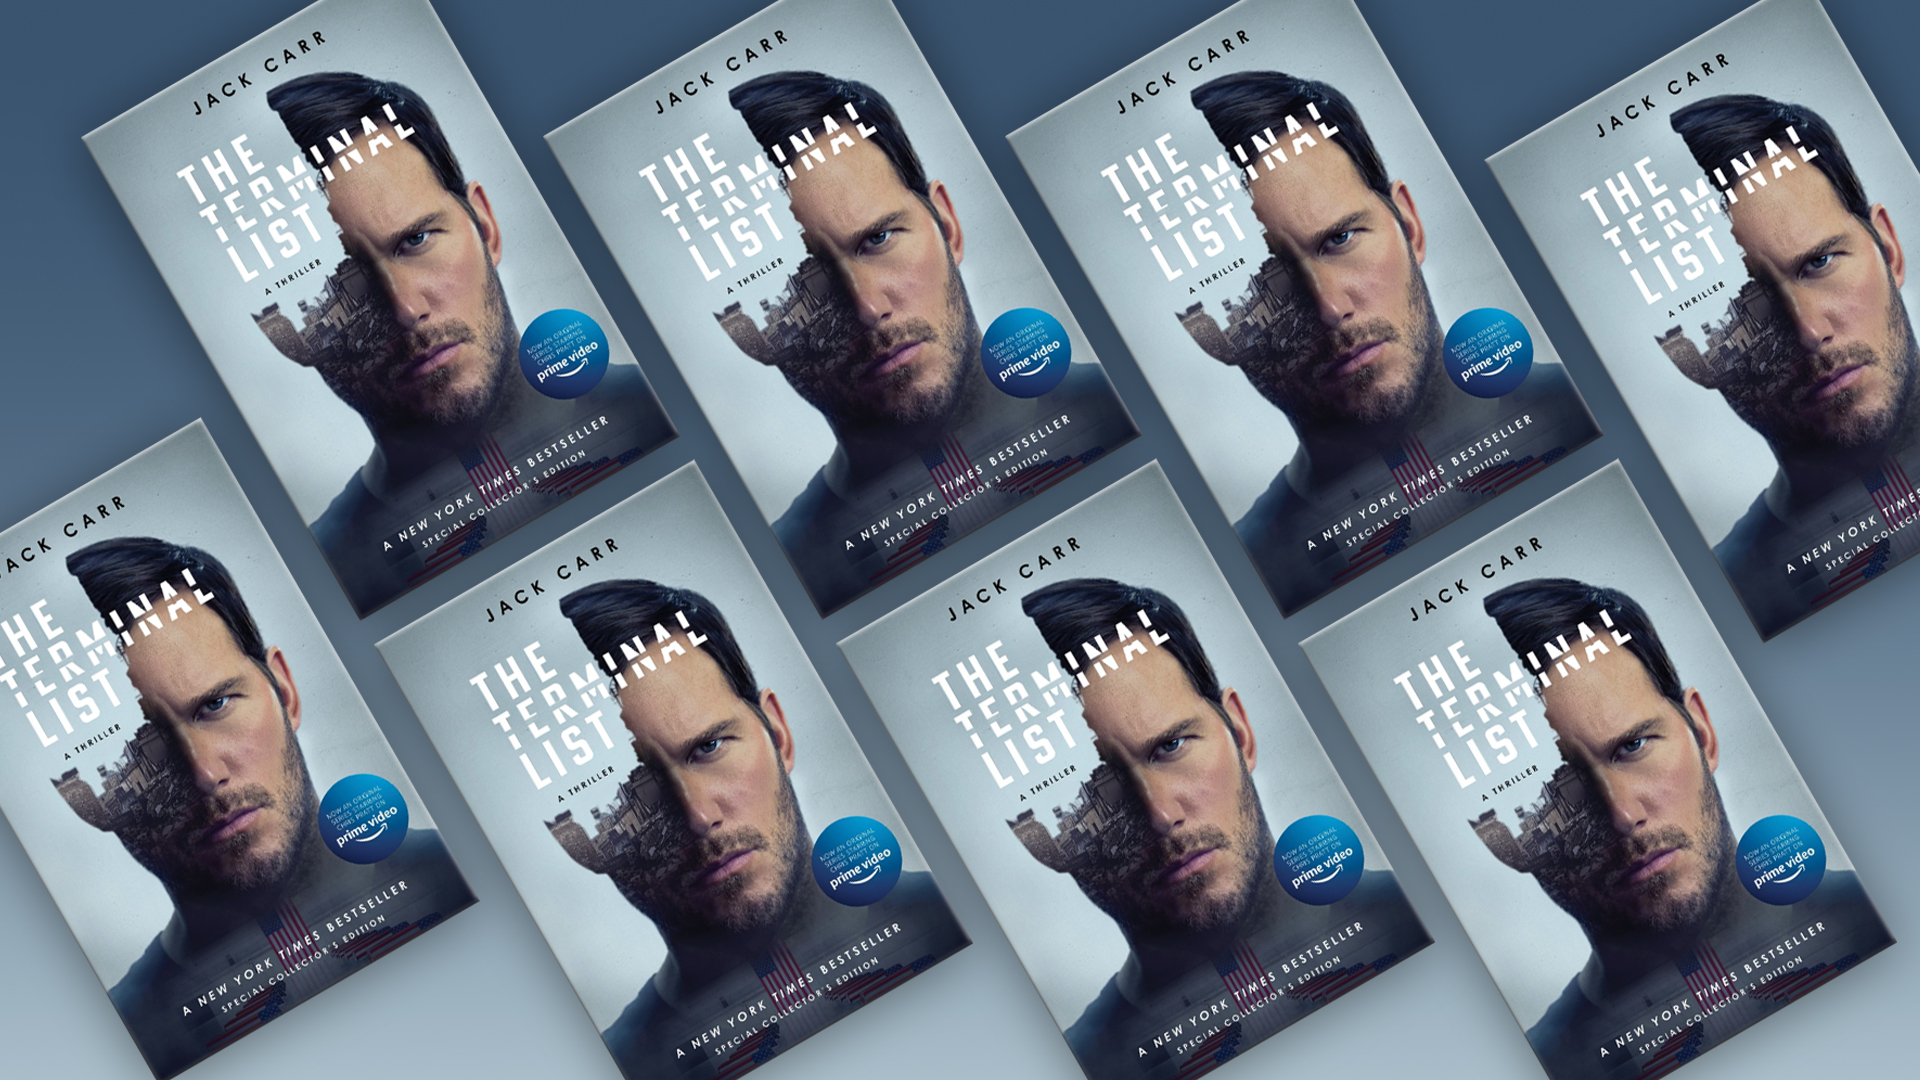 THE TERMINAL LIST Chris Pratt Cover – Jack Carr